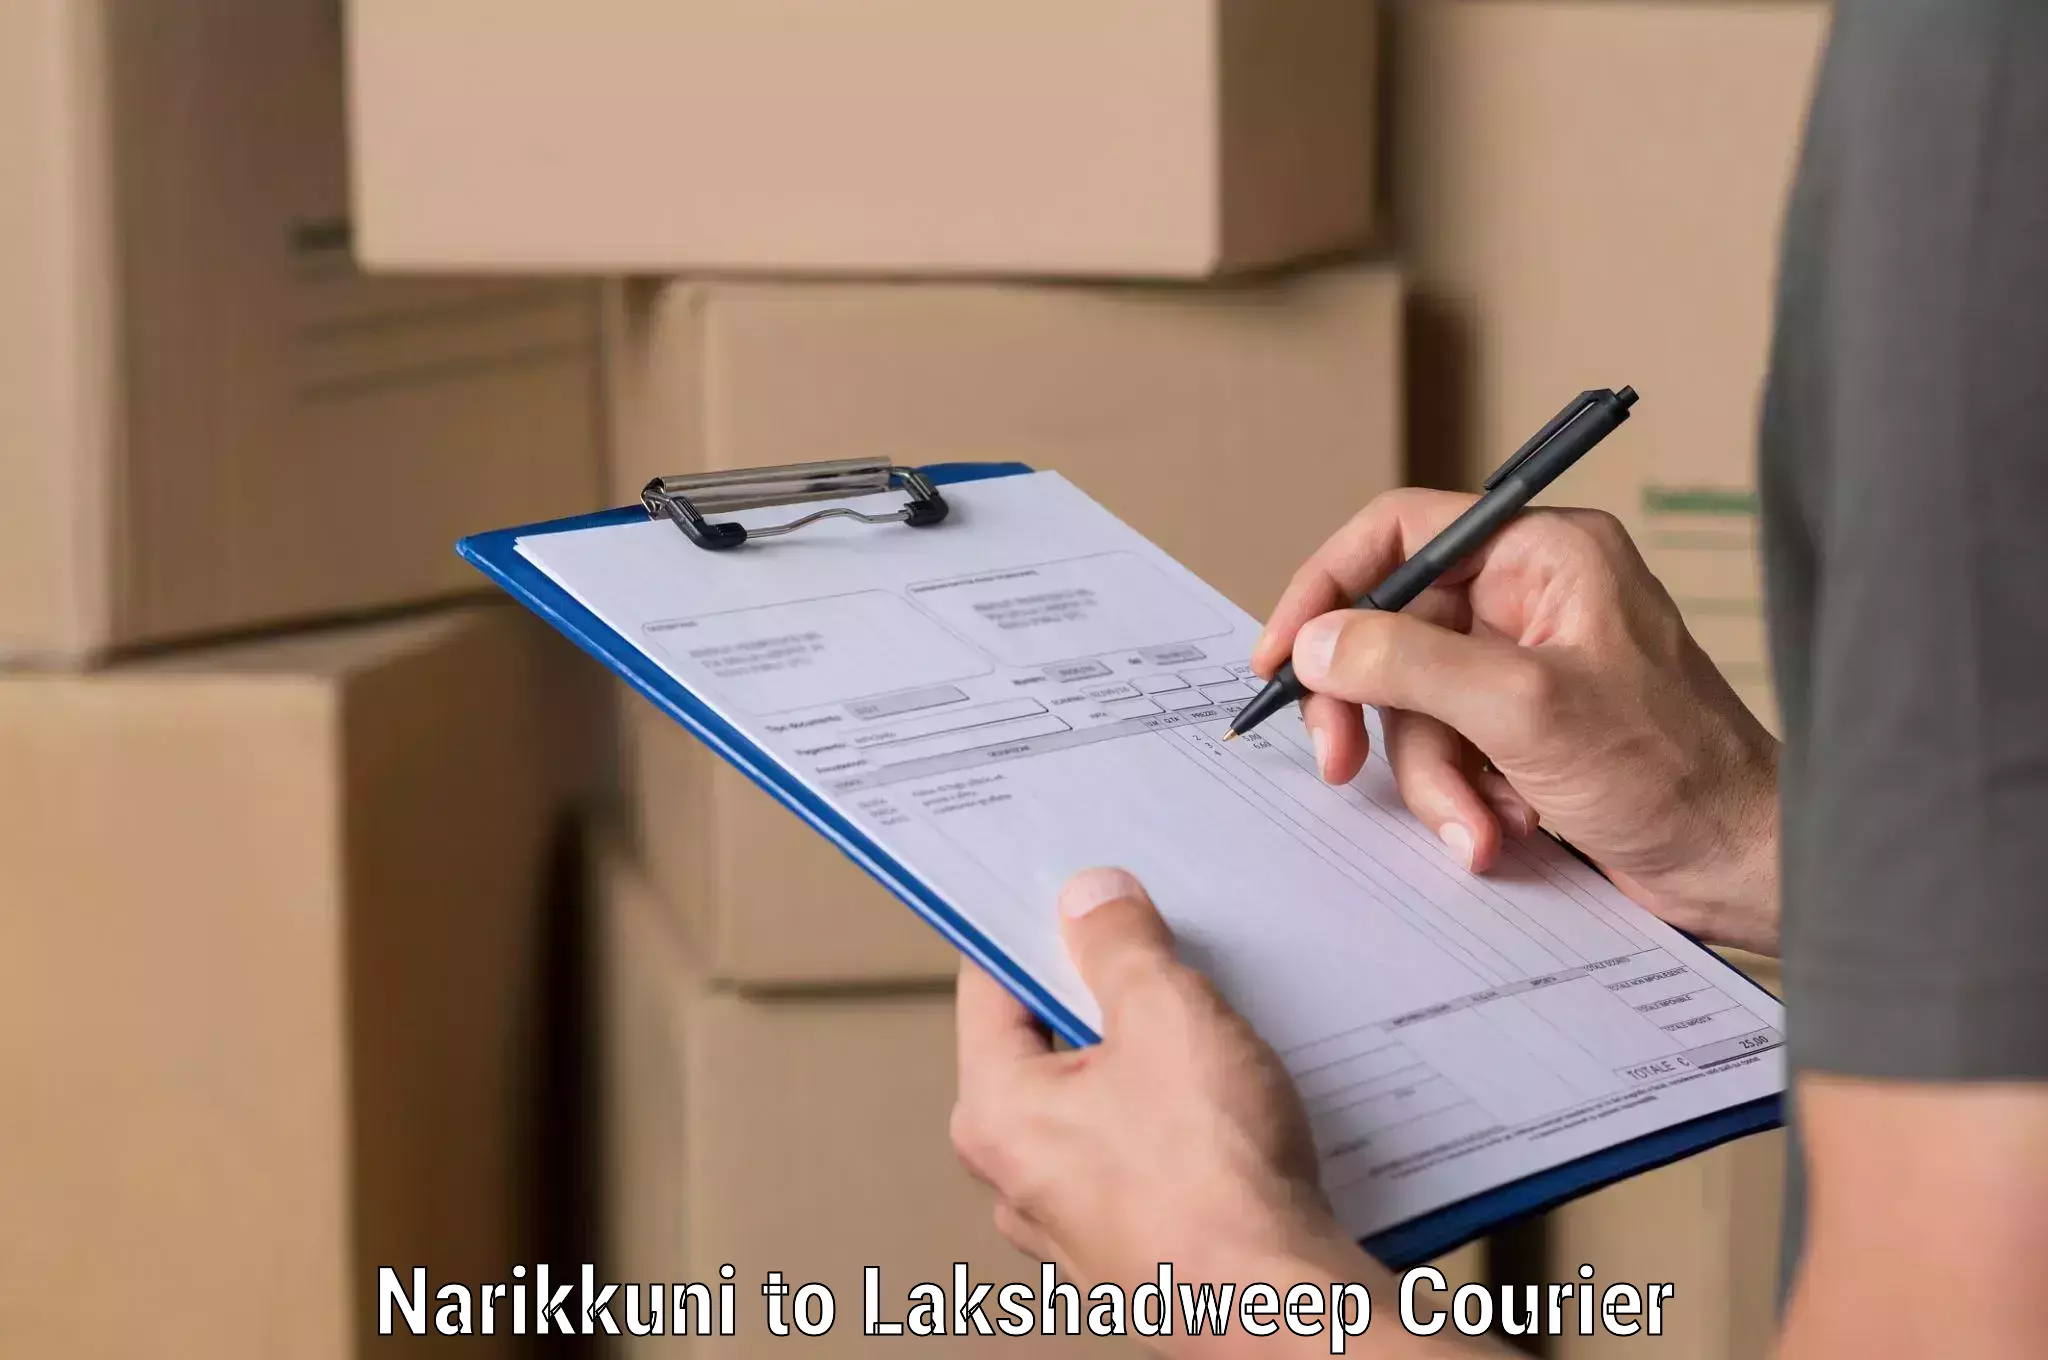 Fast delivery service Narikkuni to Lakshadweep